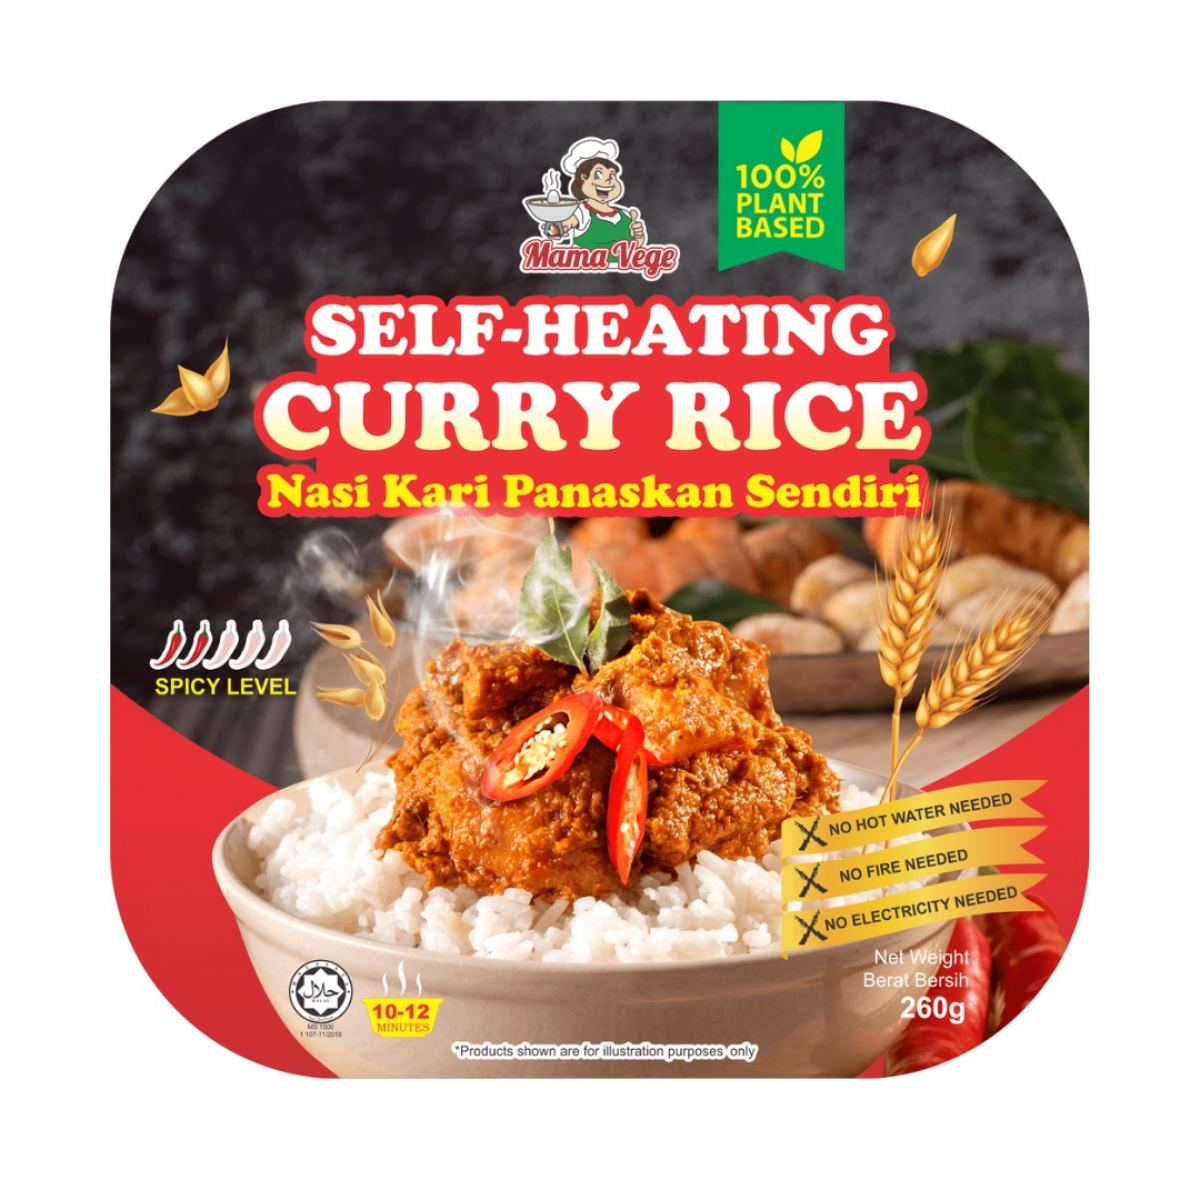 Self-heating Curry Rice (260g)